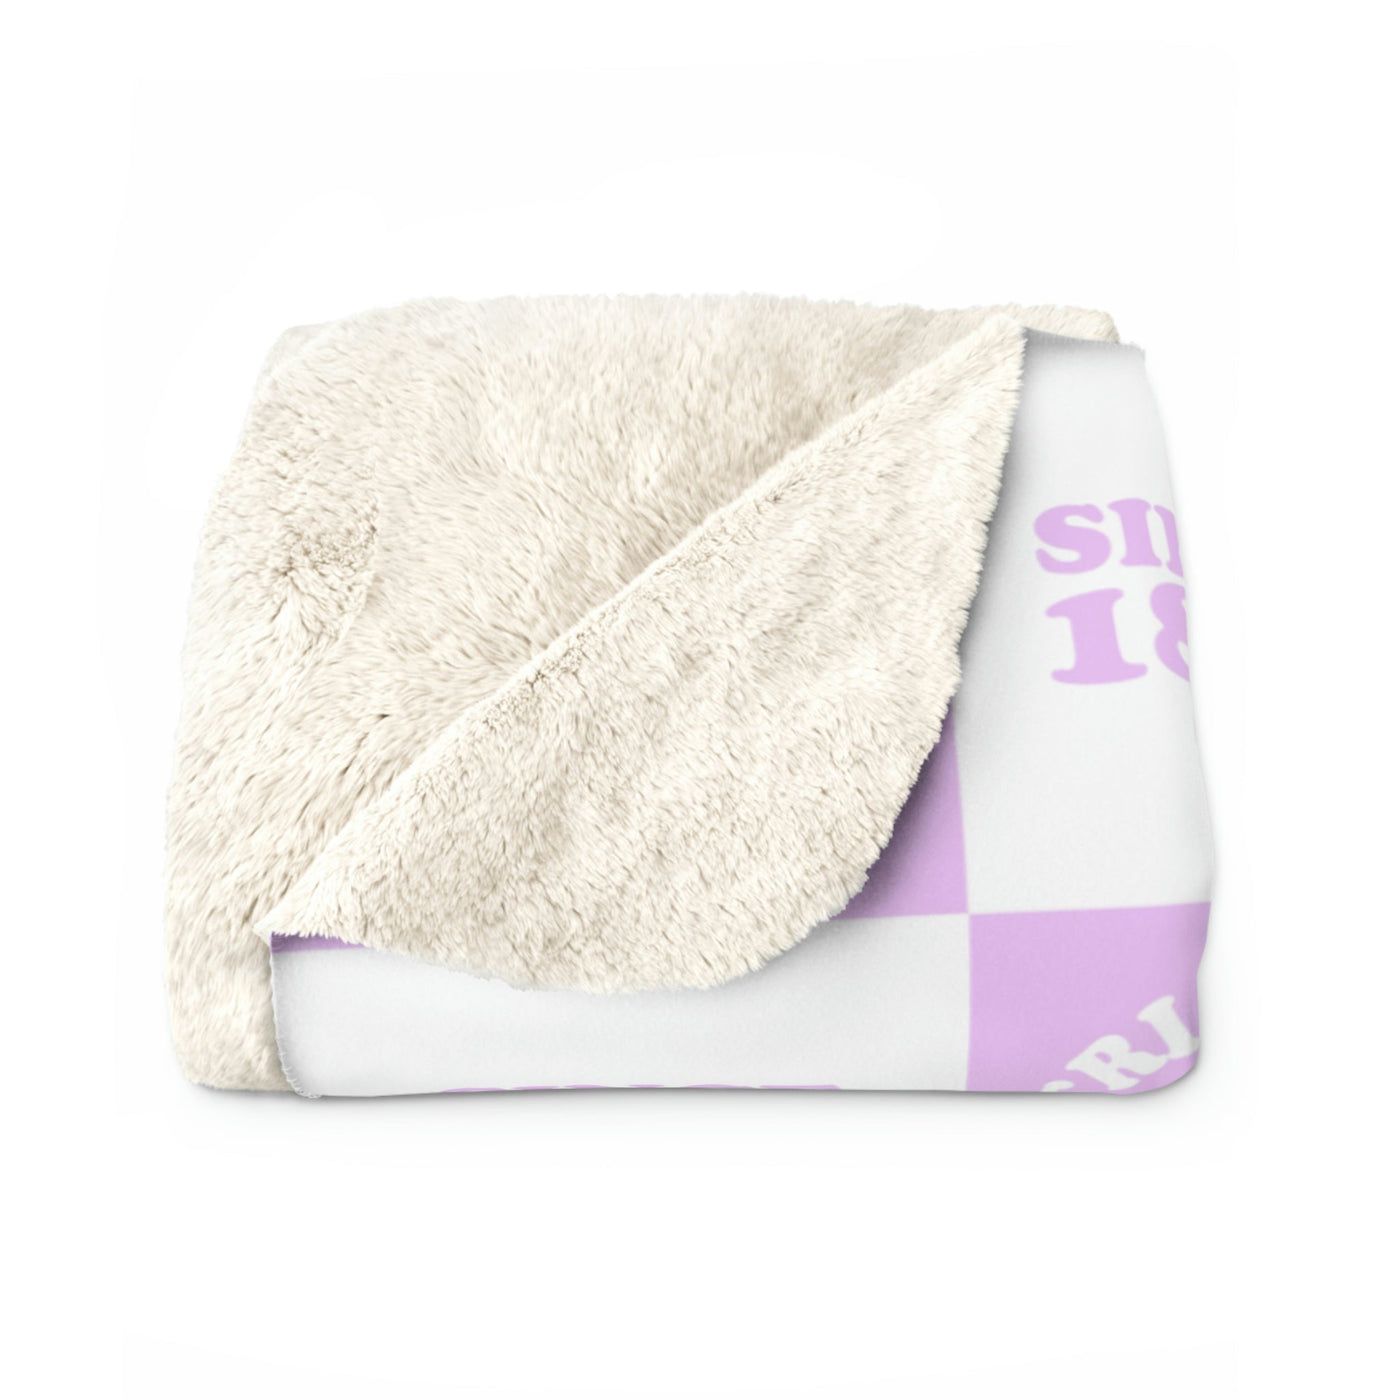 Tri Delta Fluffy Blanket | Tri Delta Cozy Sherpa Sorority Blanket